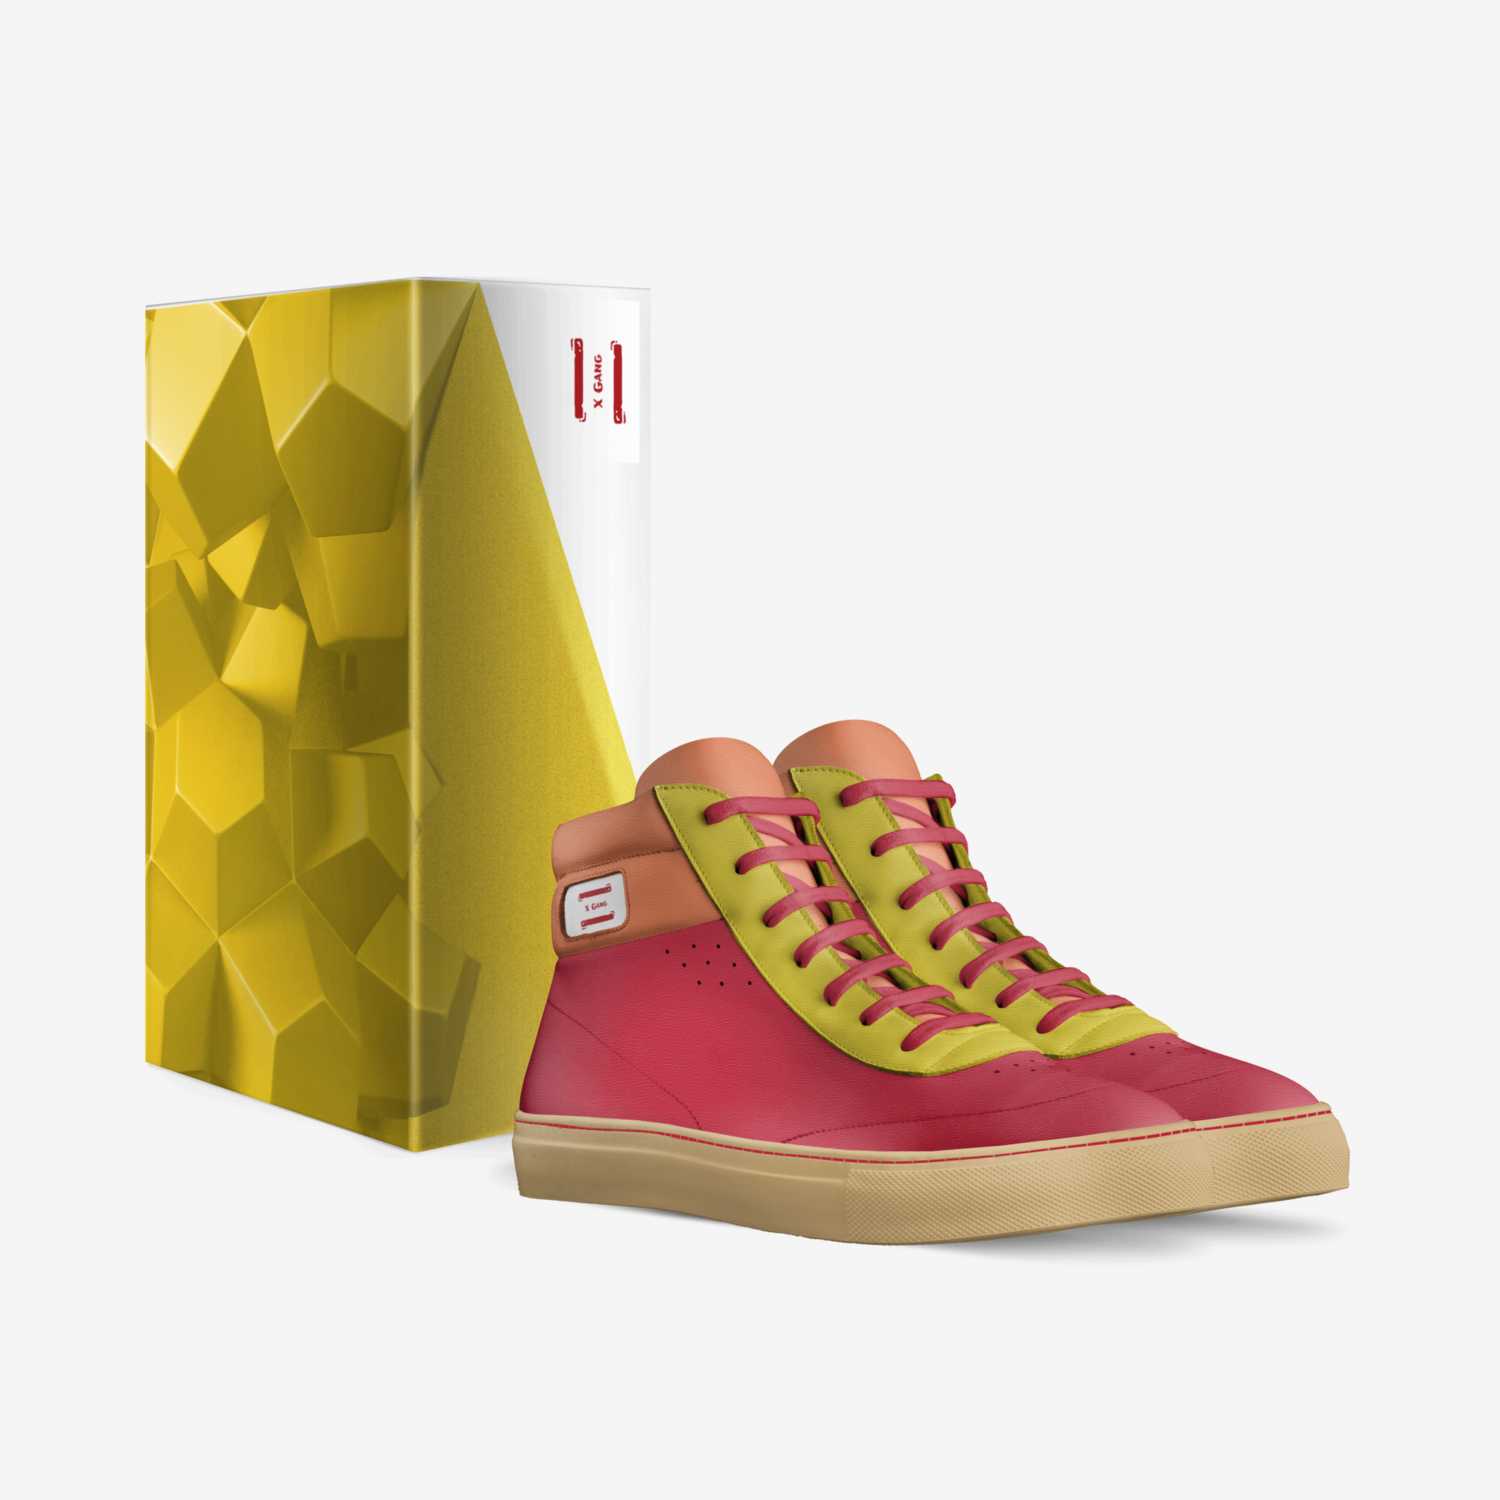 John custom made in Italy shoes by John O’brien | Box view